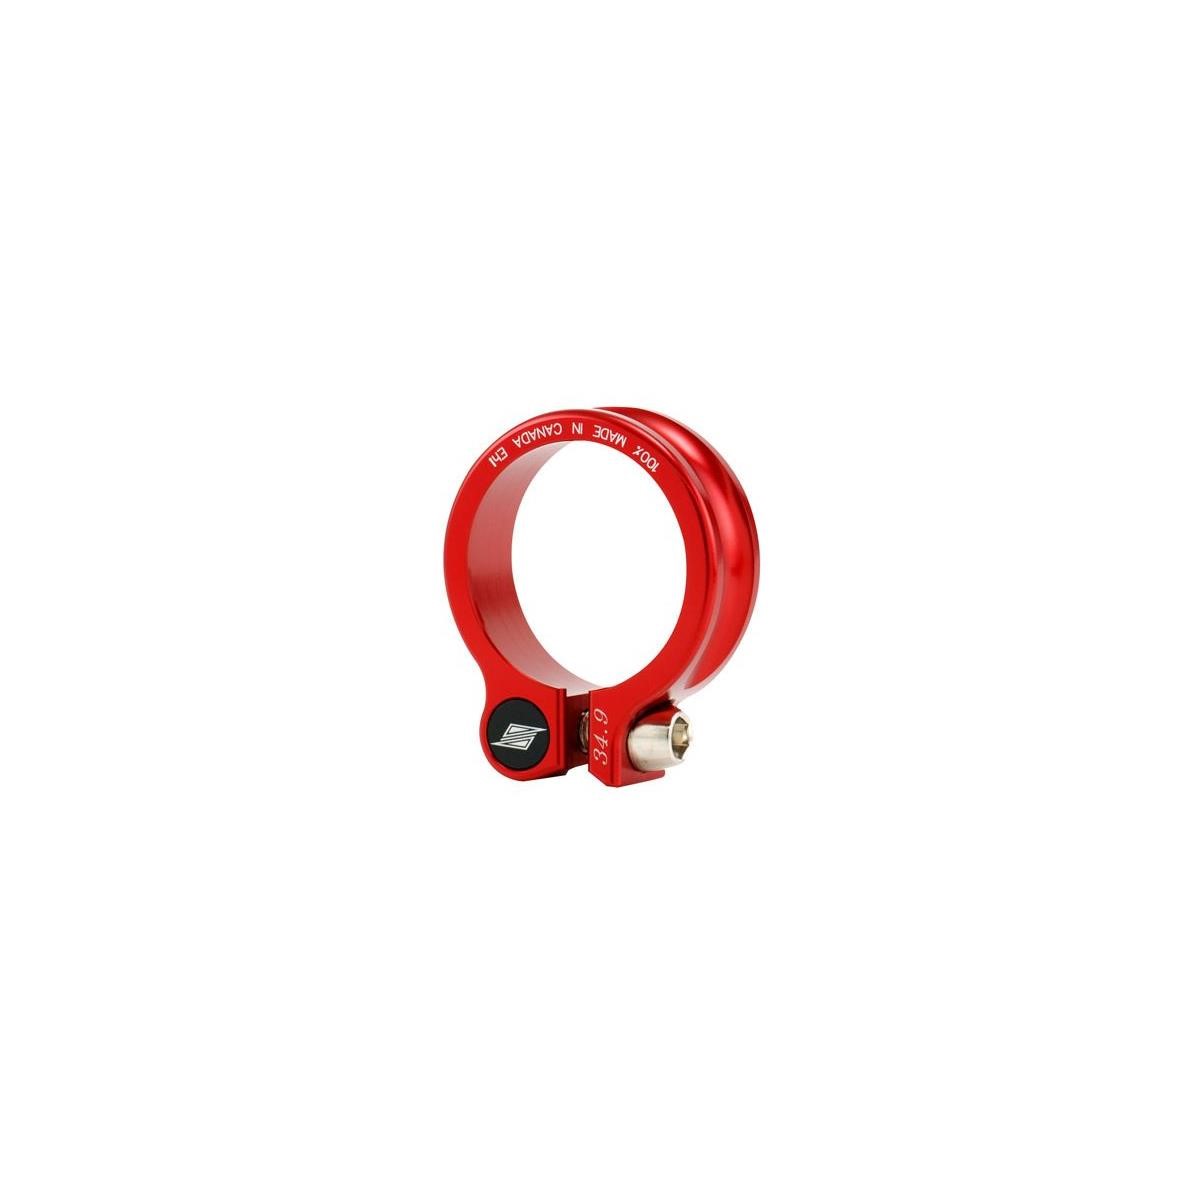 Straitline Components Collarino Reggisella Seatpost Collar Red, 34.9 mm